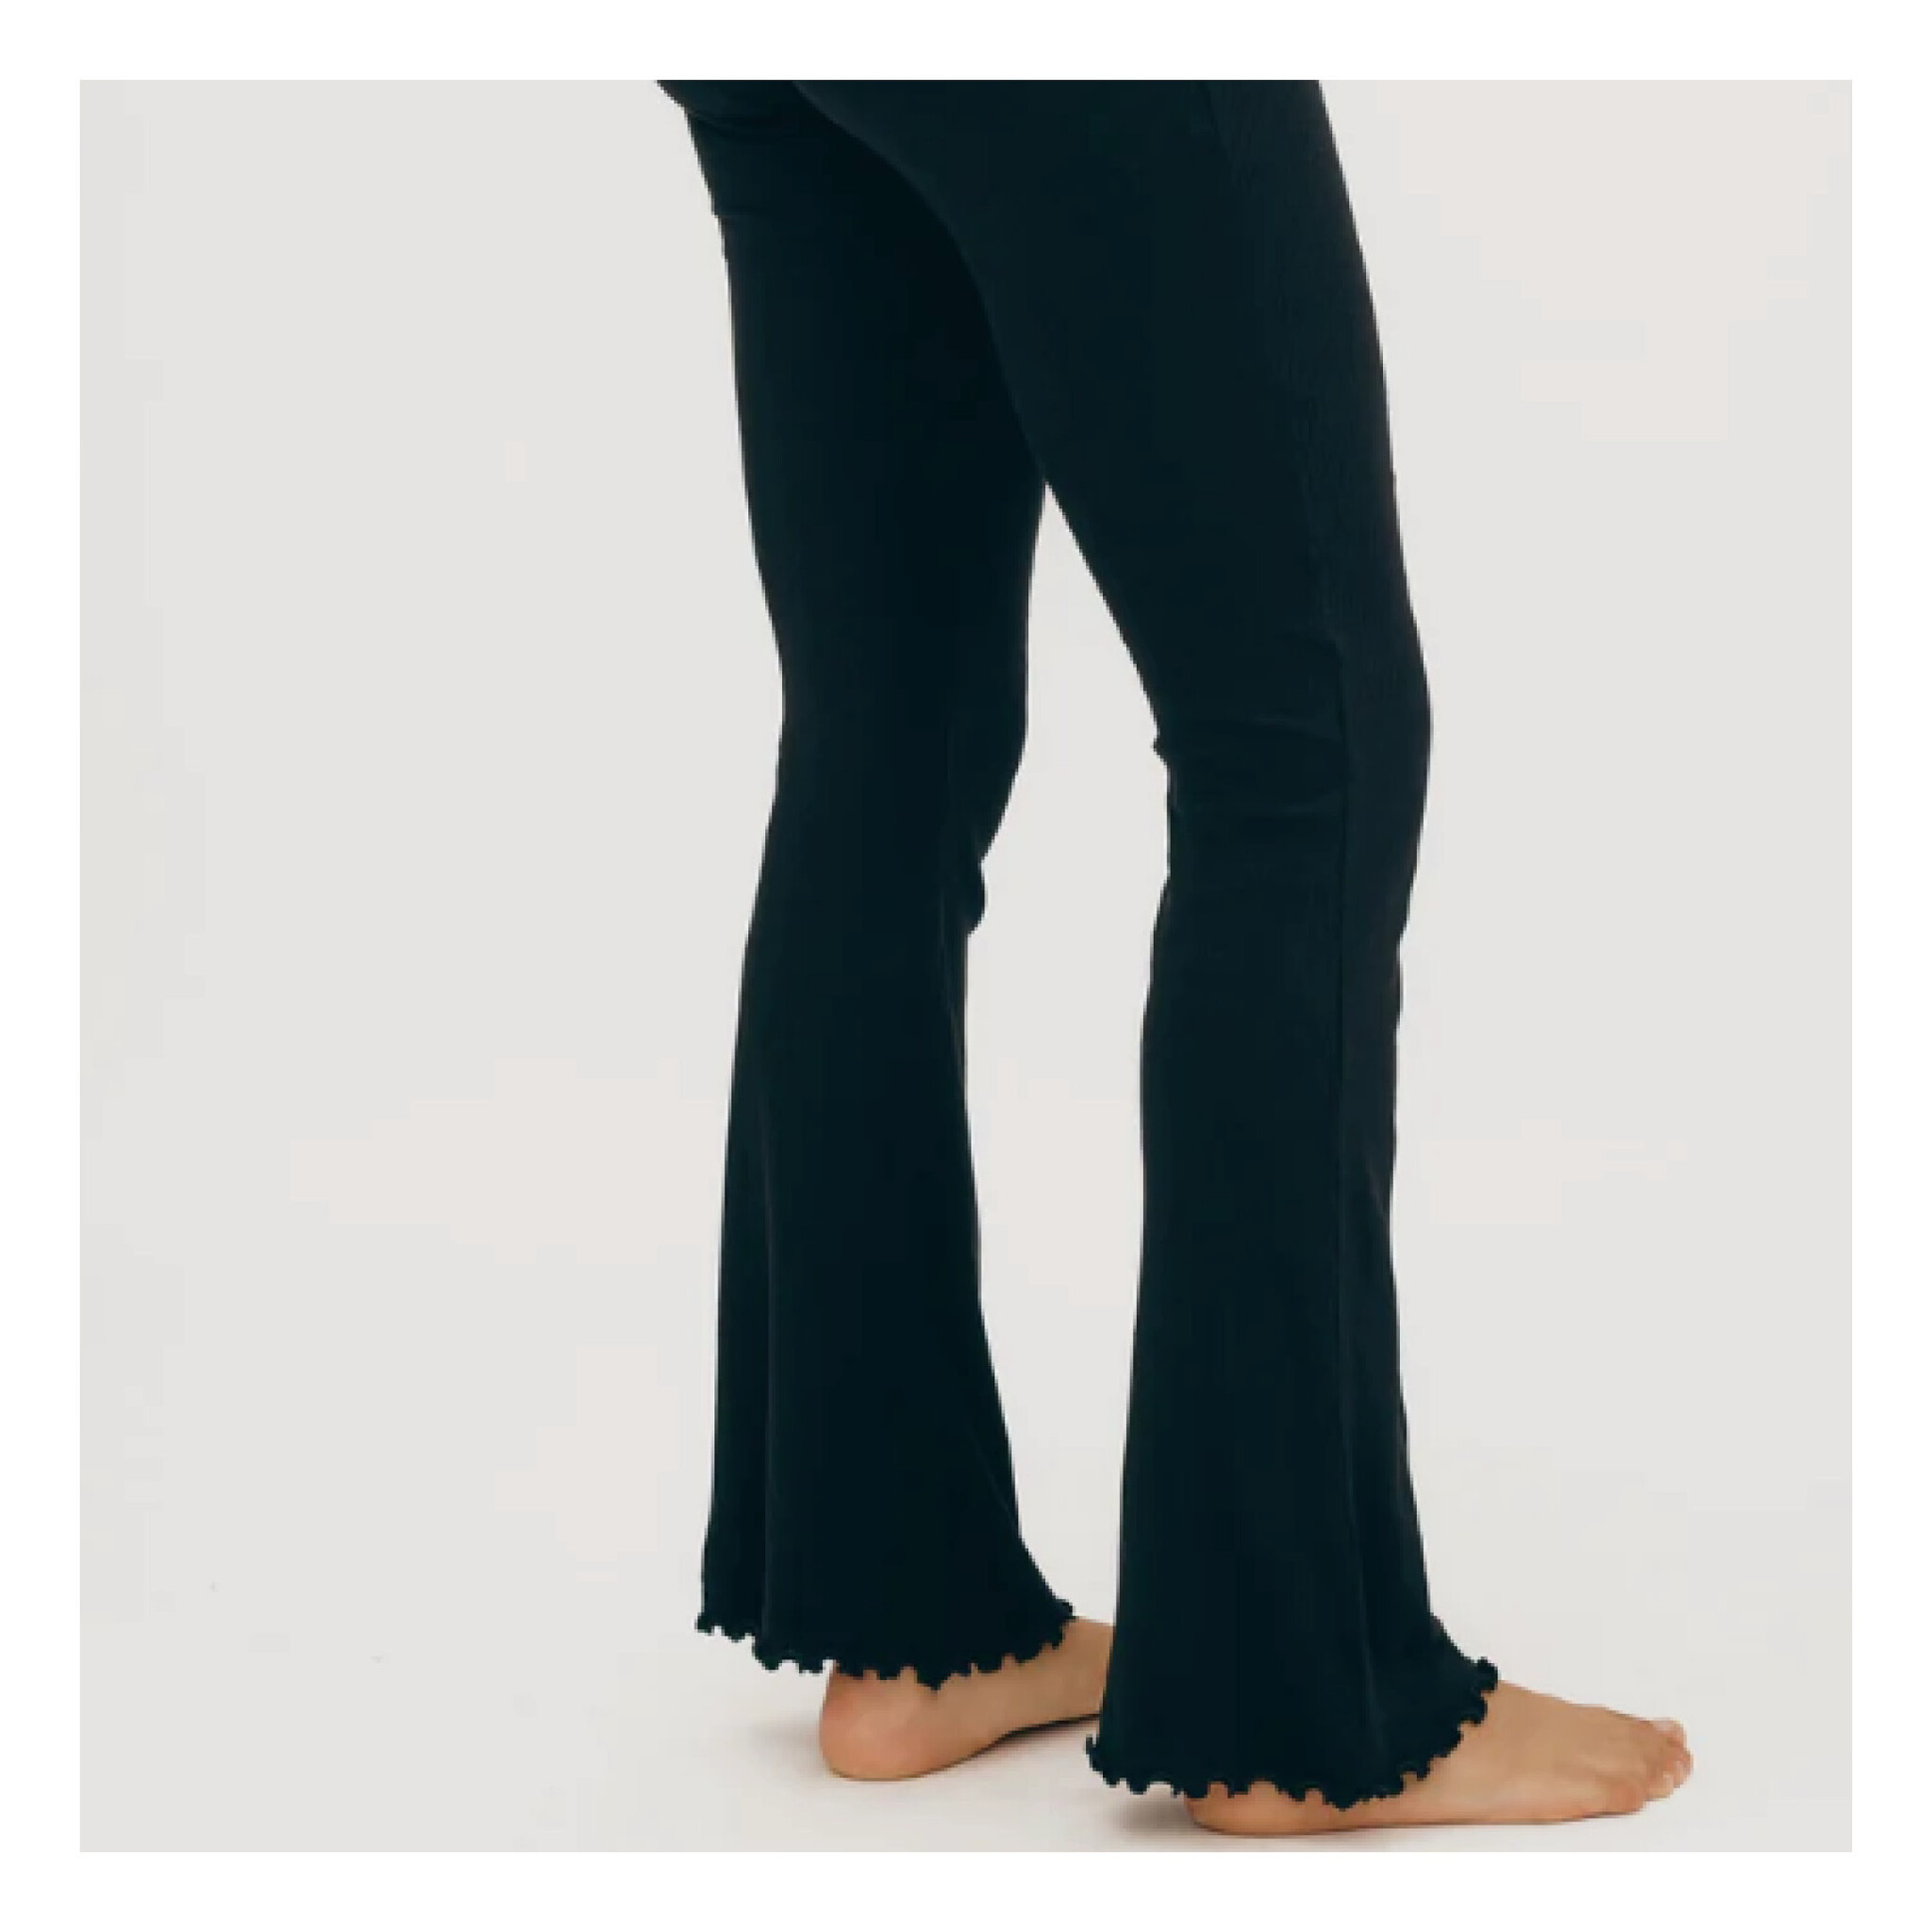 Rib Black Flare Pants, Flare Pants in Black, Black Flared Leggings, Bell  Bottoms Yoga Pants, Rib Flare Legging -  Canada